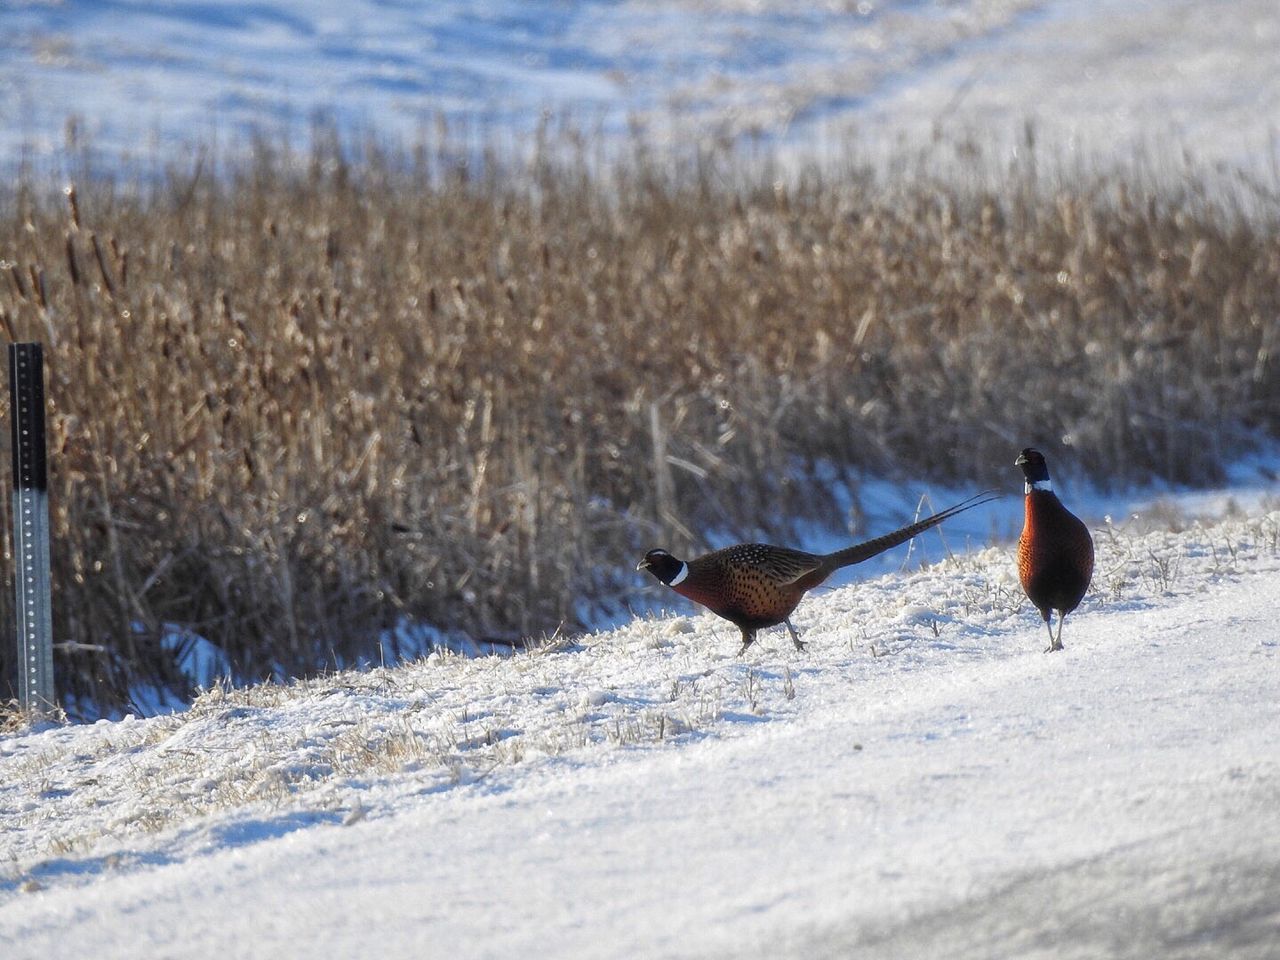 Pheasant season